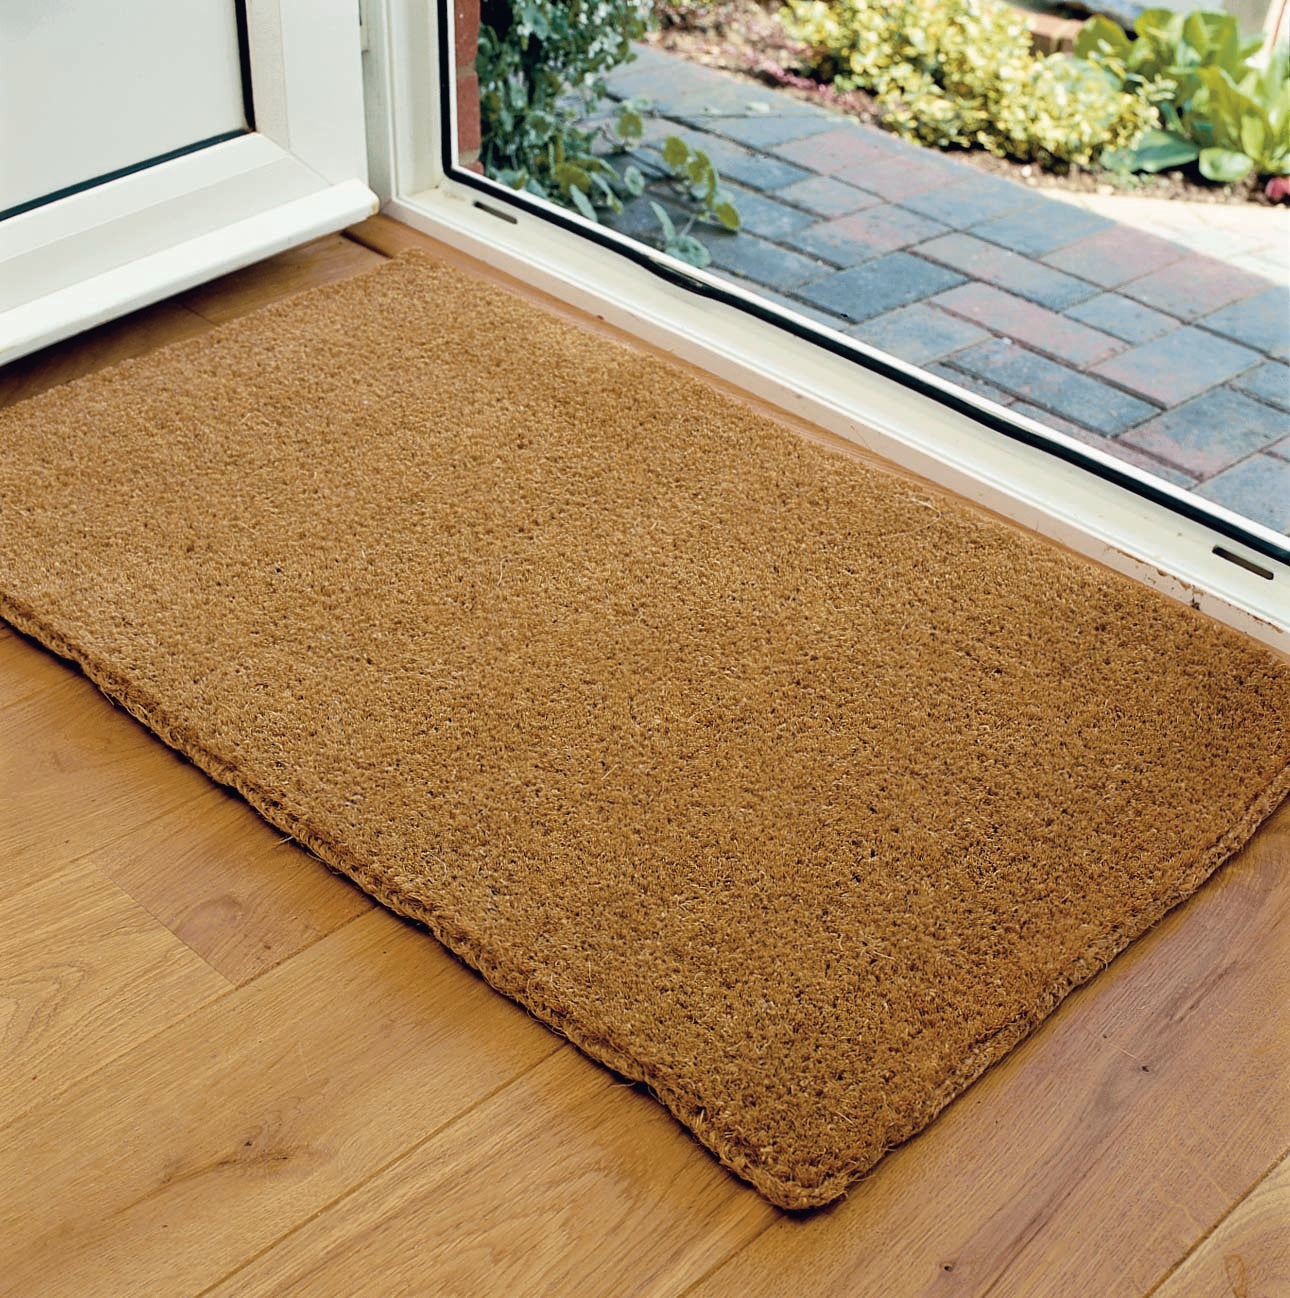 Kersey Natural Coir Doormat - Various Sizes - Premium Doormats from William Armes - Just $17.5! Shop now at W Hurst & Son (IW) Ltd